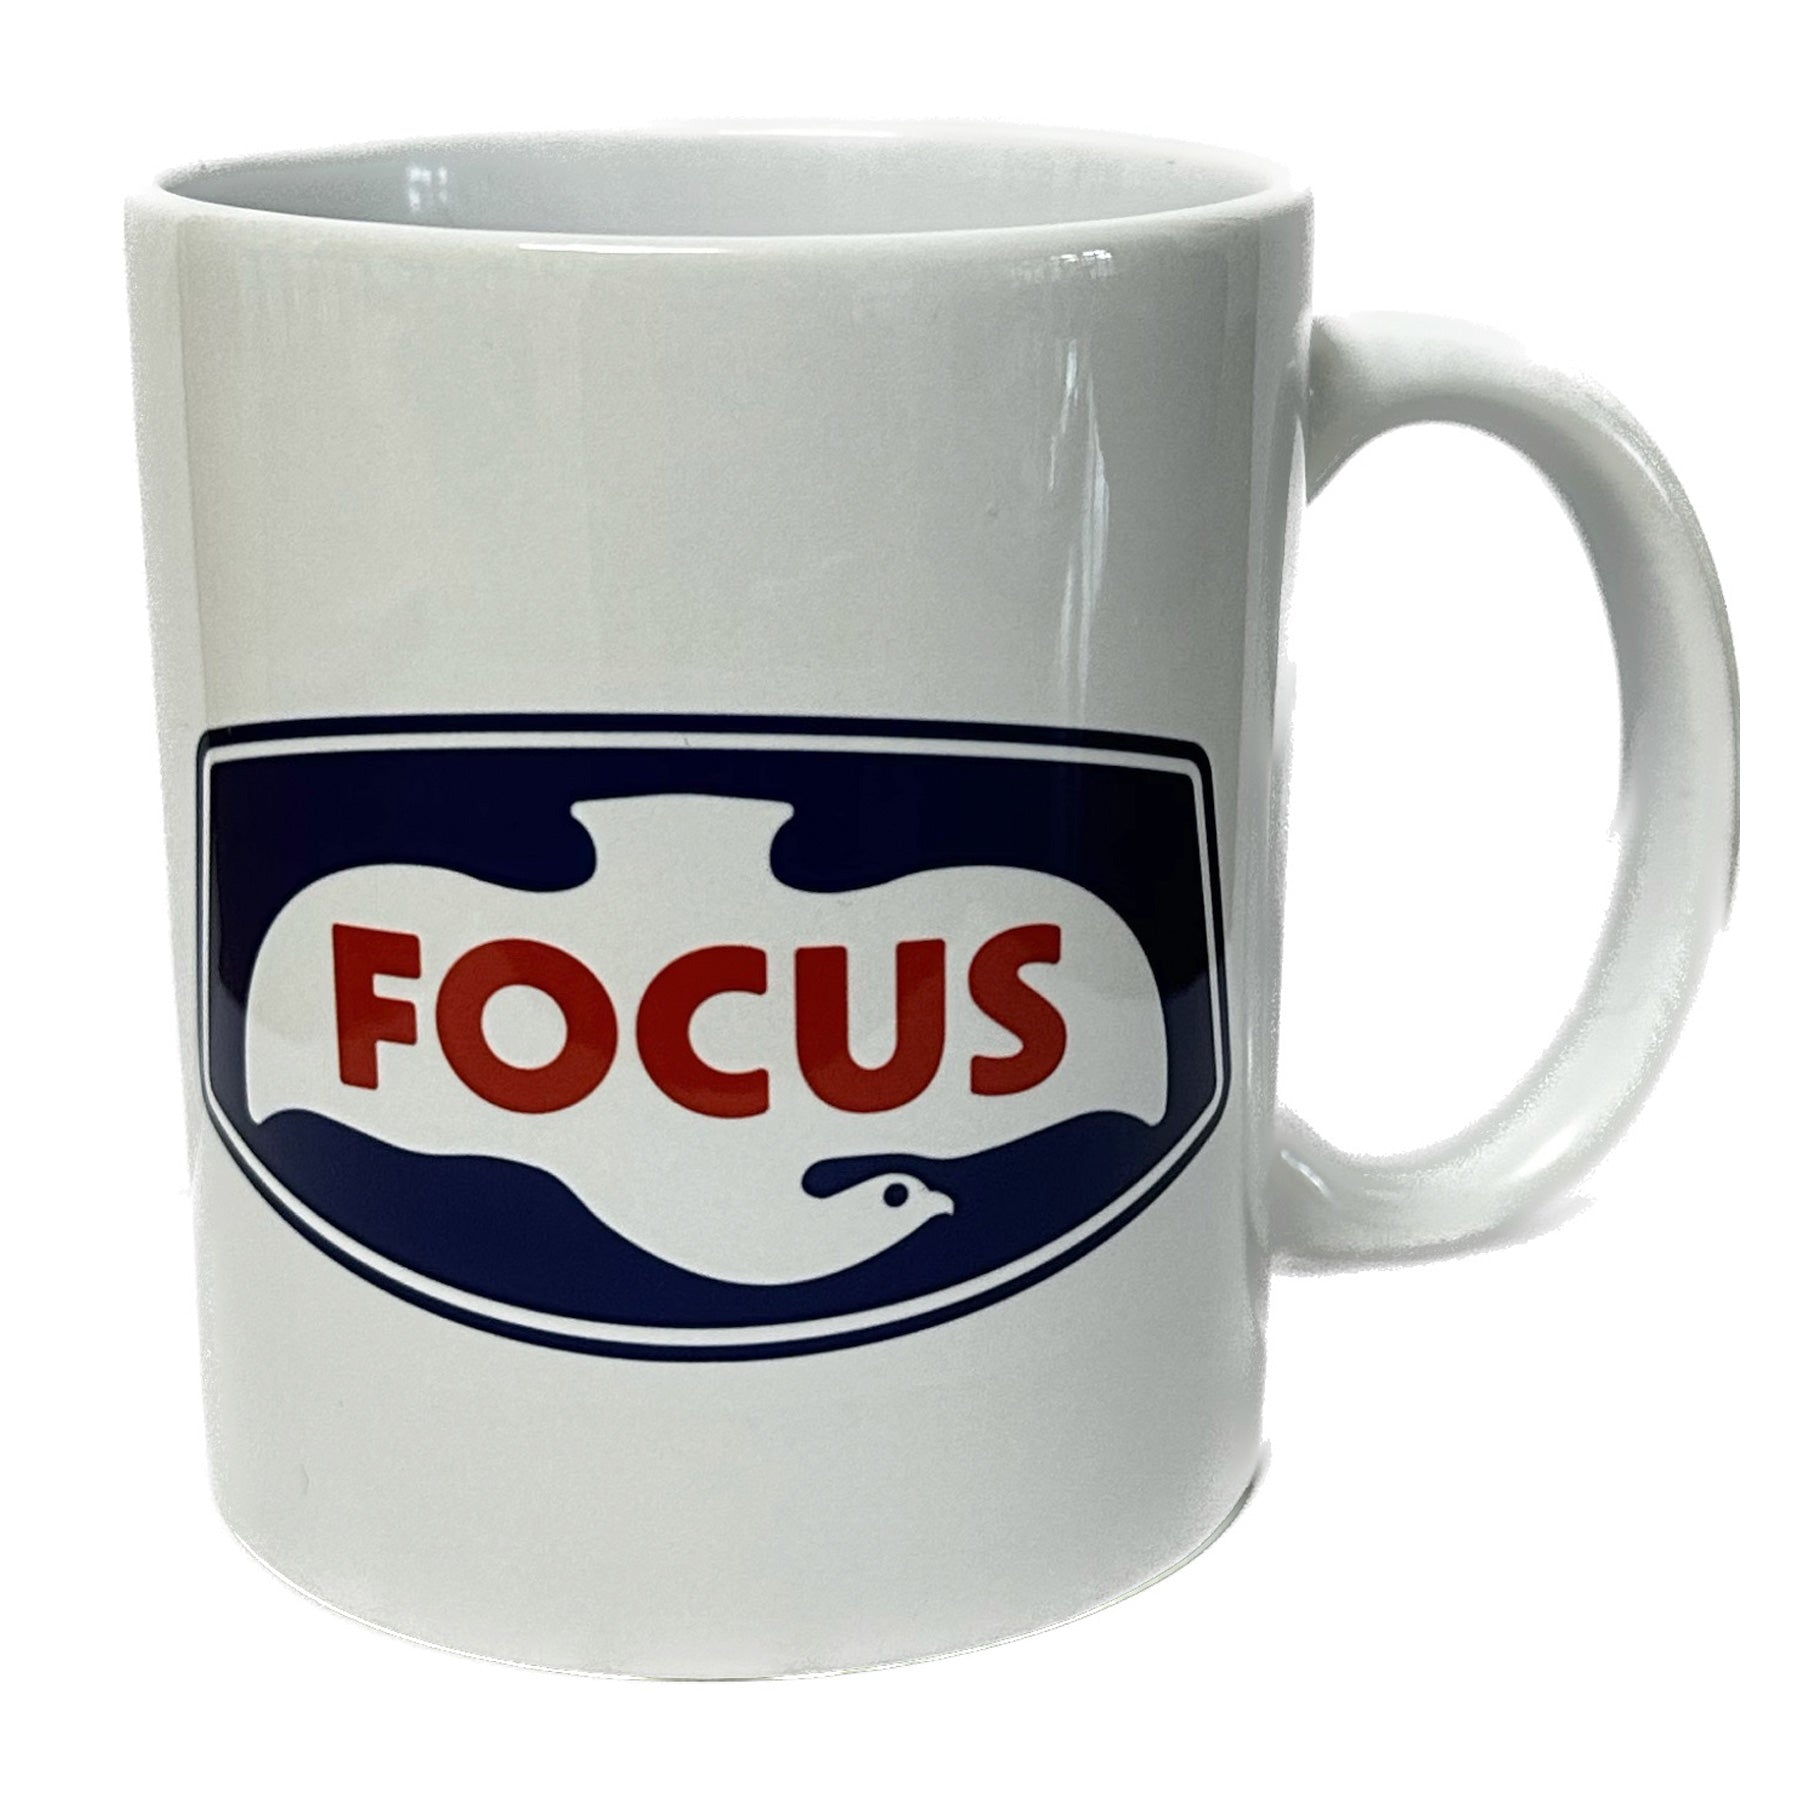 Focus Fondus Coffee Mug